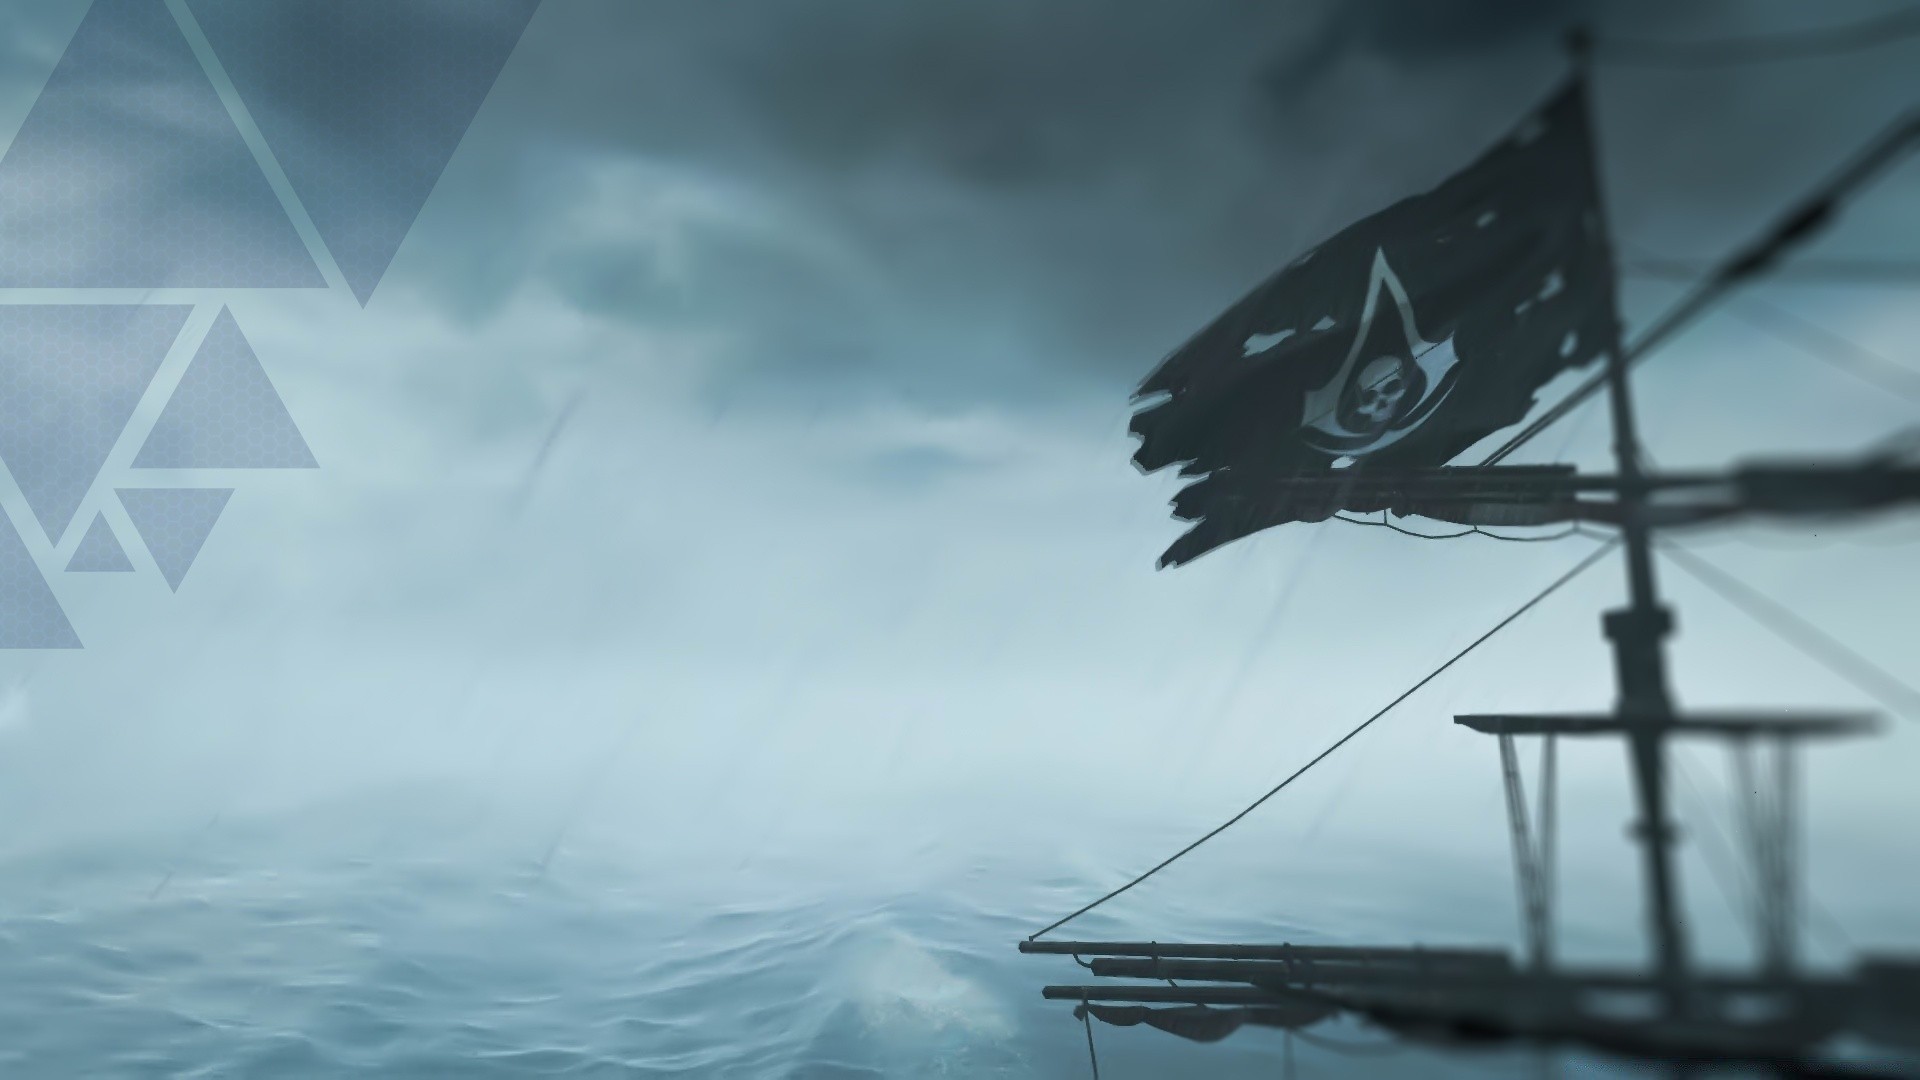 assassin s creed water sky sea travel wind nature ocean outdoors ship watercraft fog